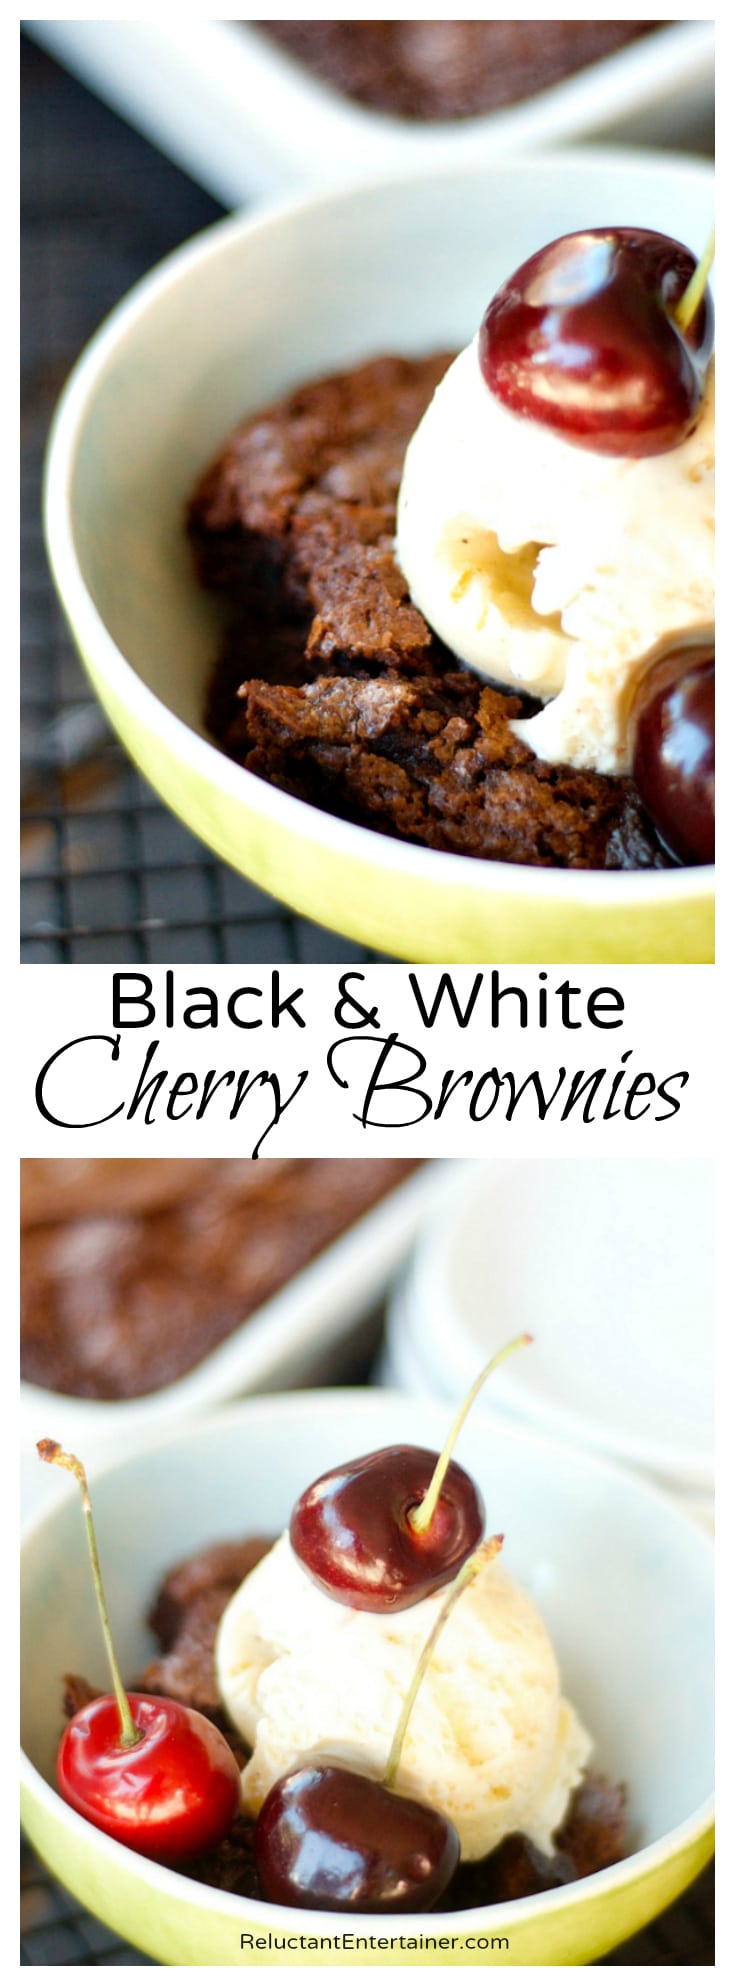 Black and White Cherry Brownies Recipe